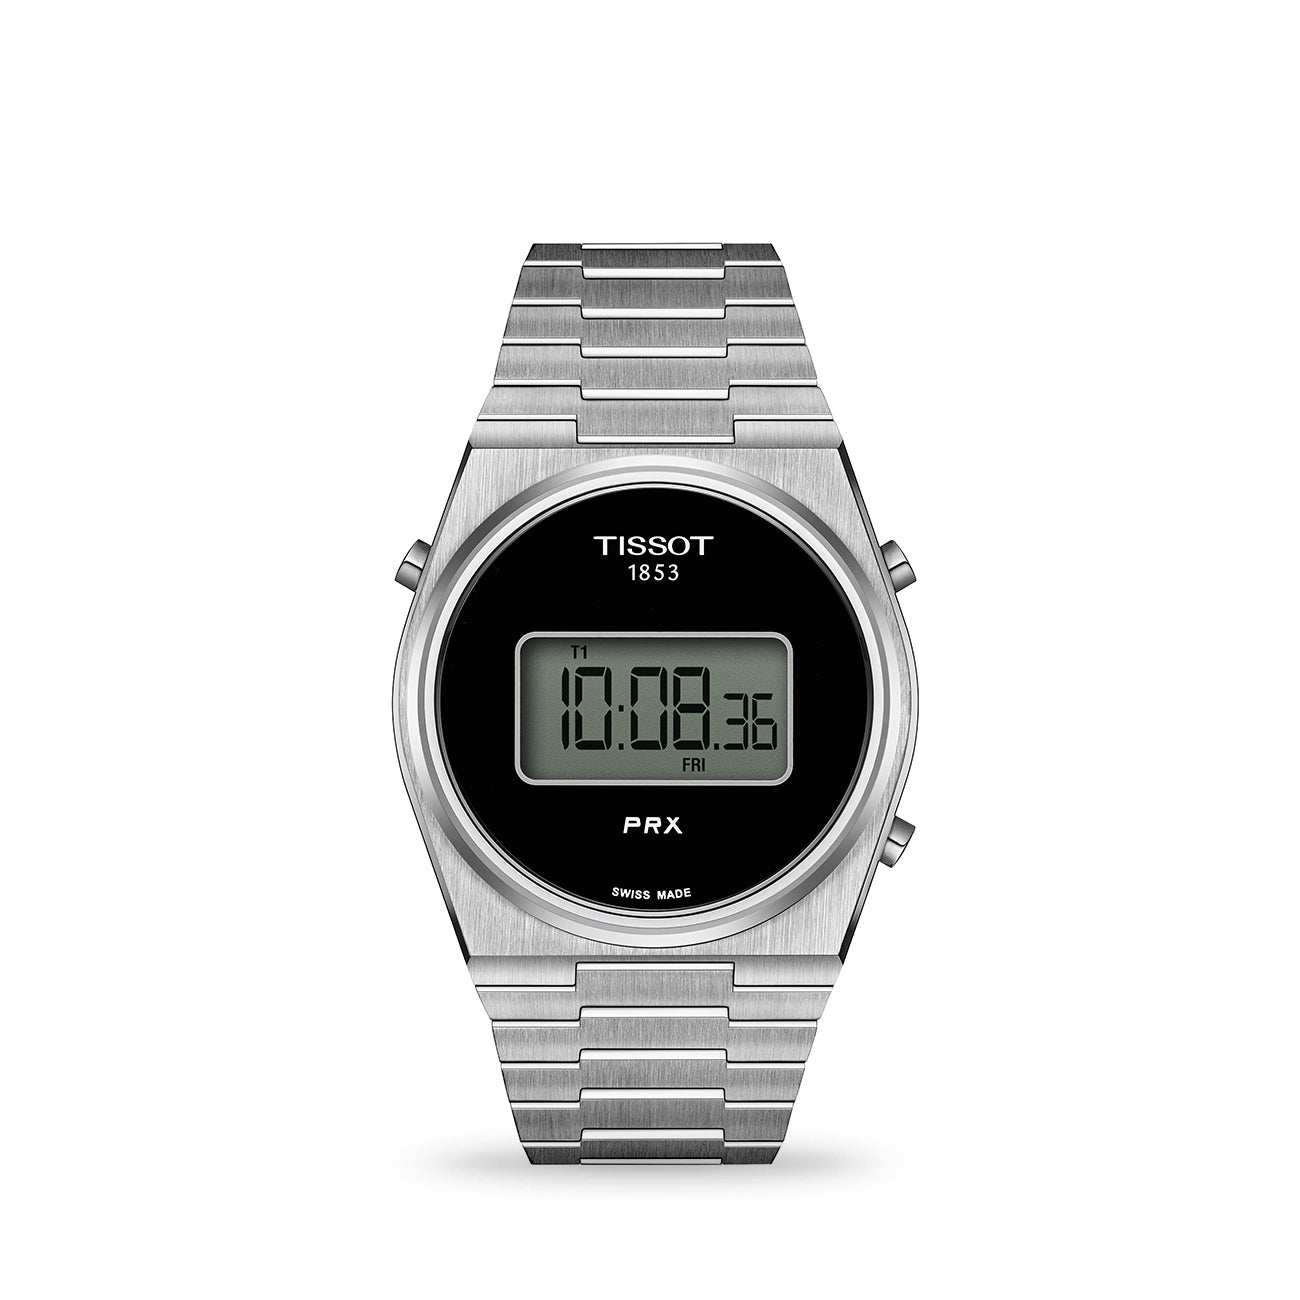 Tissot PRX Men's 40mm Digital Watch T137.463.11.050.00